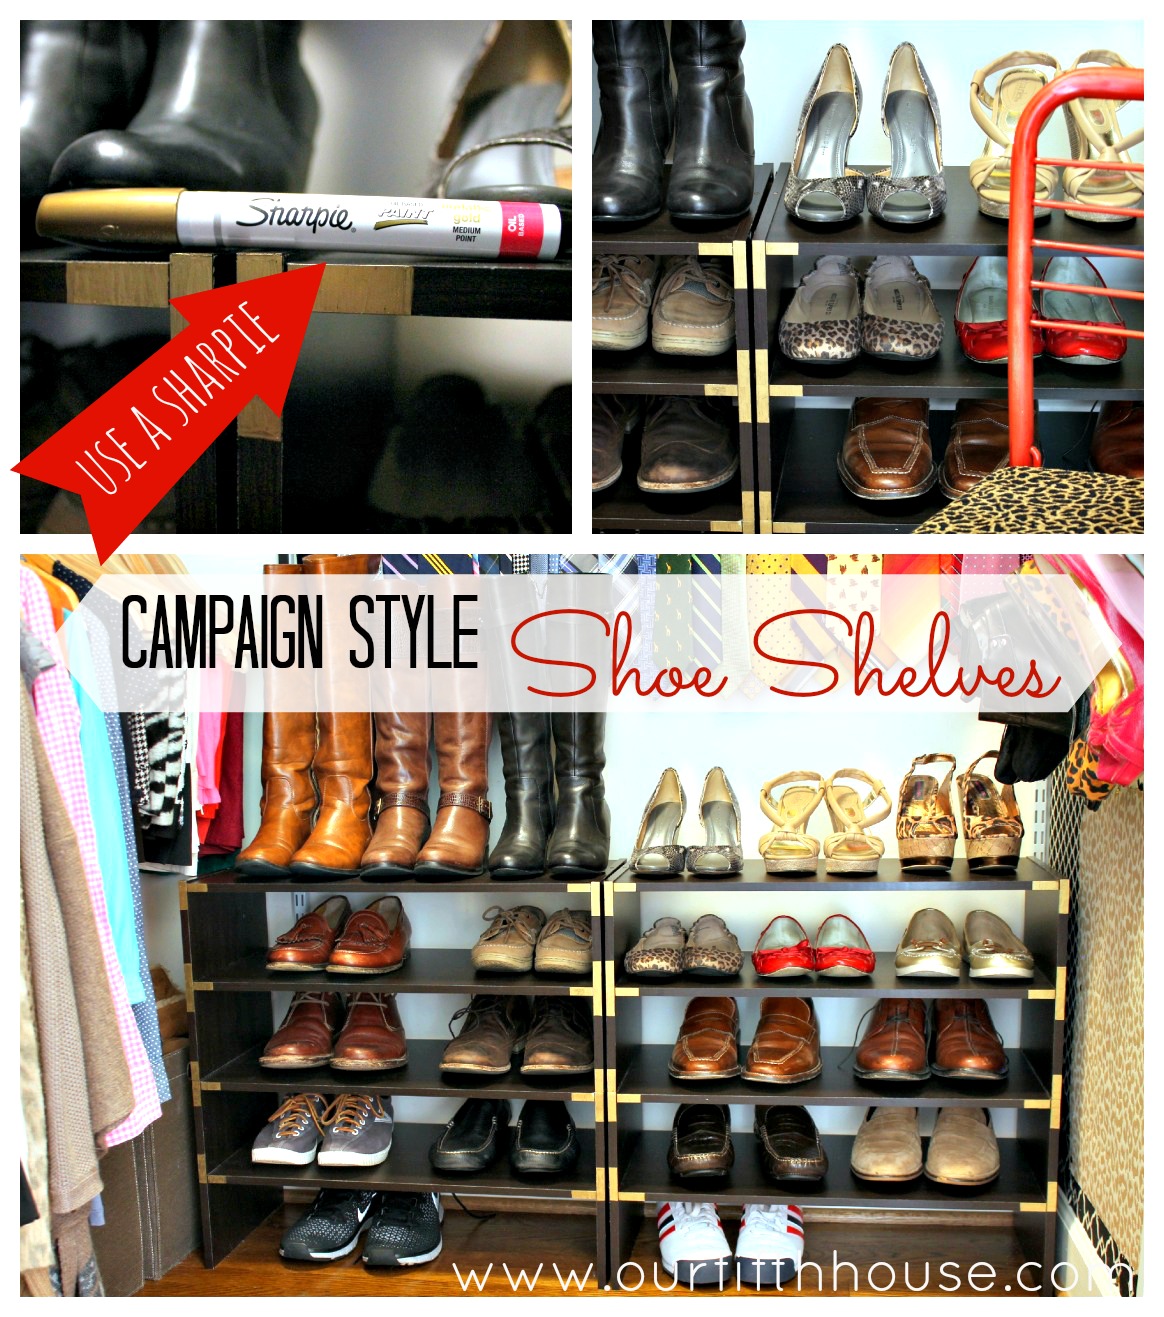 Our Fifth House: DIY Shoe Rack & Campaign Style Shoe Shelves